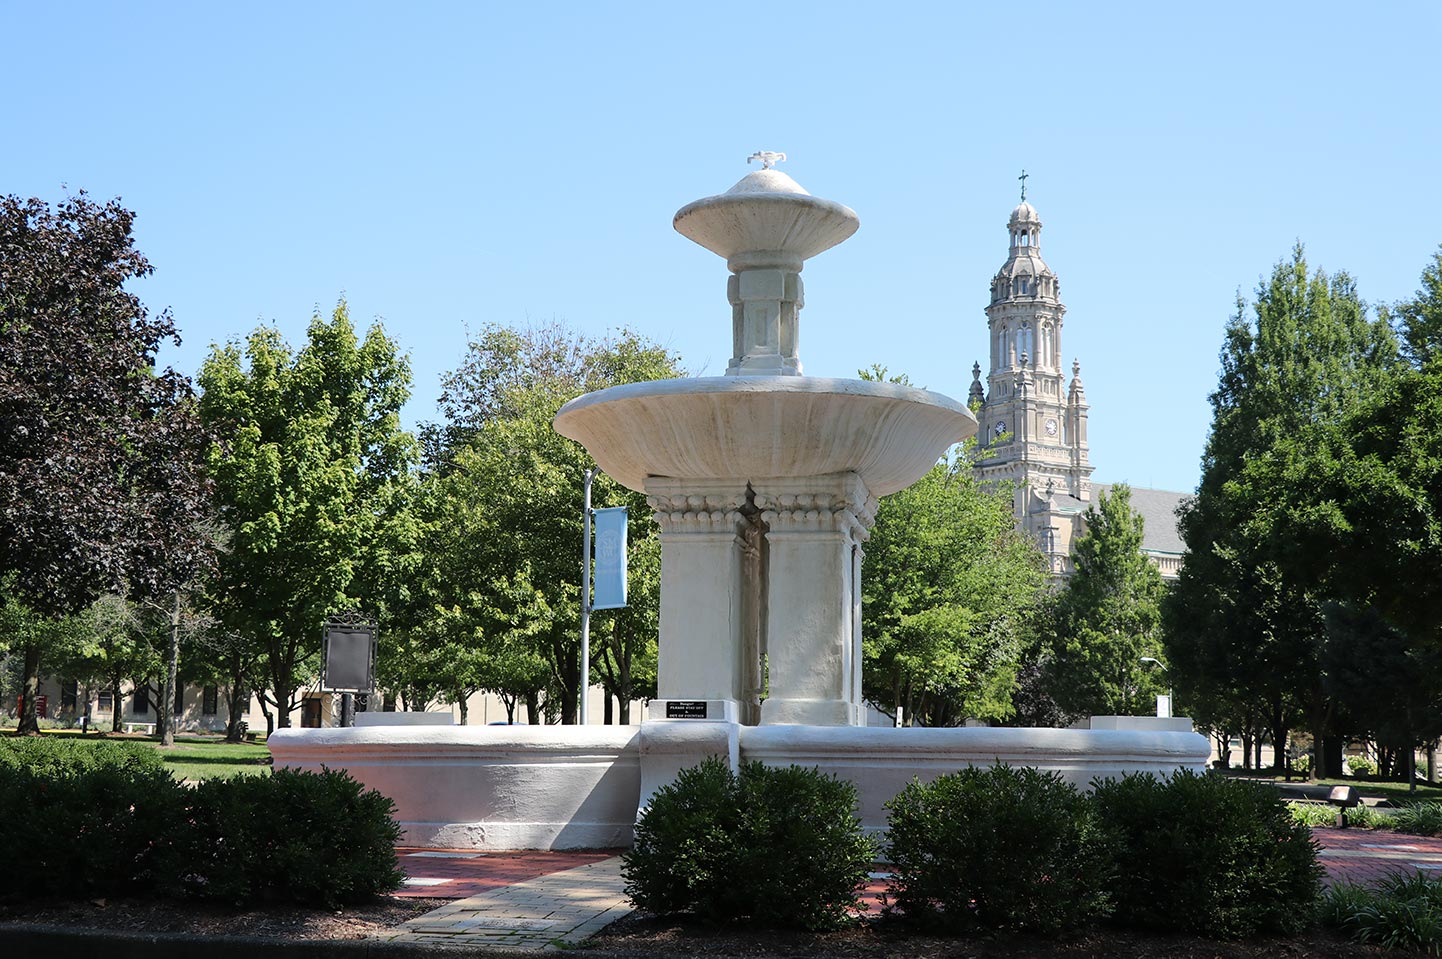 Closeup of the Fountain